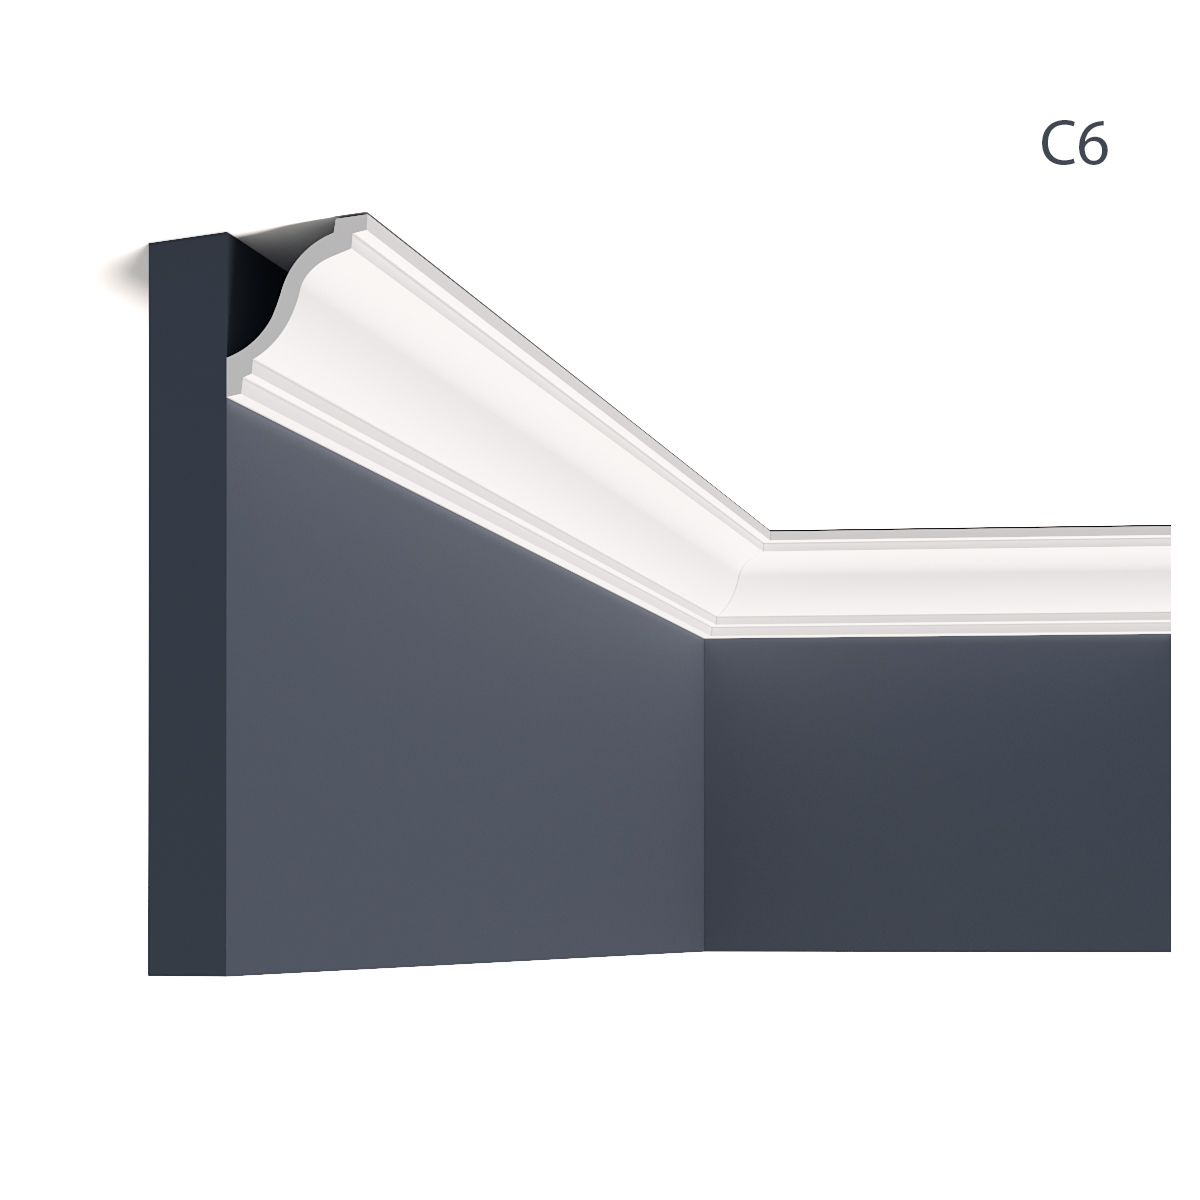 Cornișe tavan Manavi MNV-C6-5.4x5.2x200, material: polimer rigid